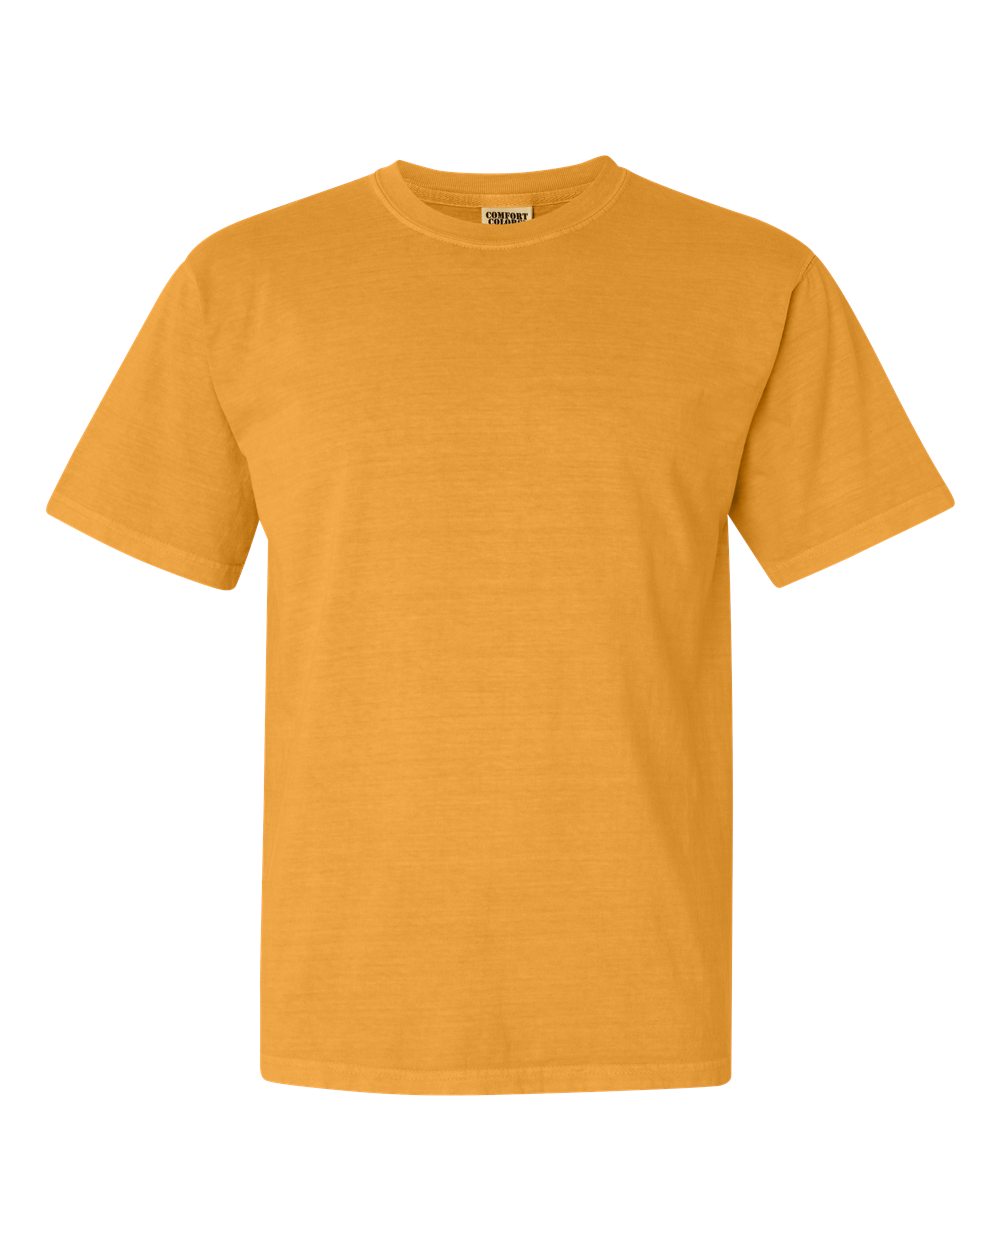 Comfort Colors photography Mustard Shirt mockup Garment Dyed Heavyweight Ringspun Short Sleeve Shirt 1717 flat lay